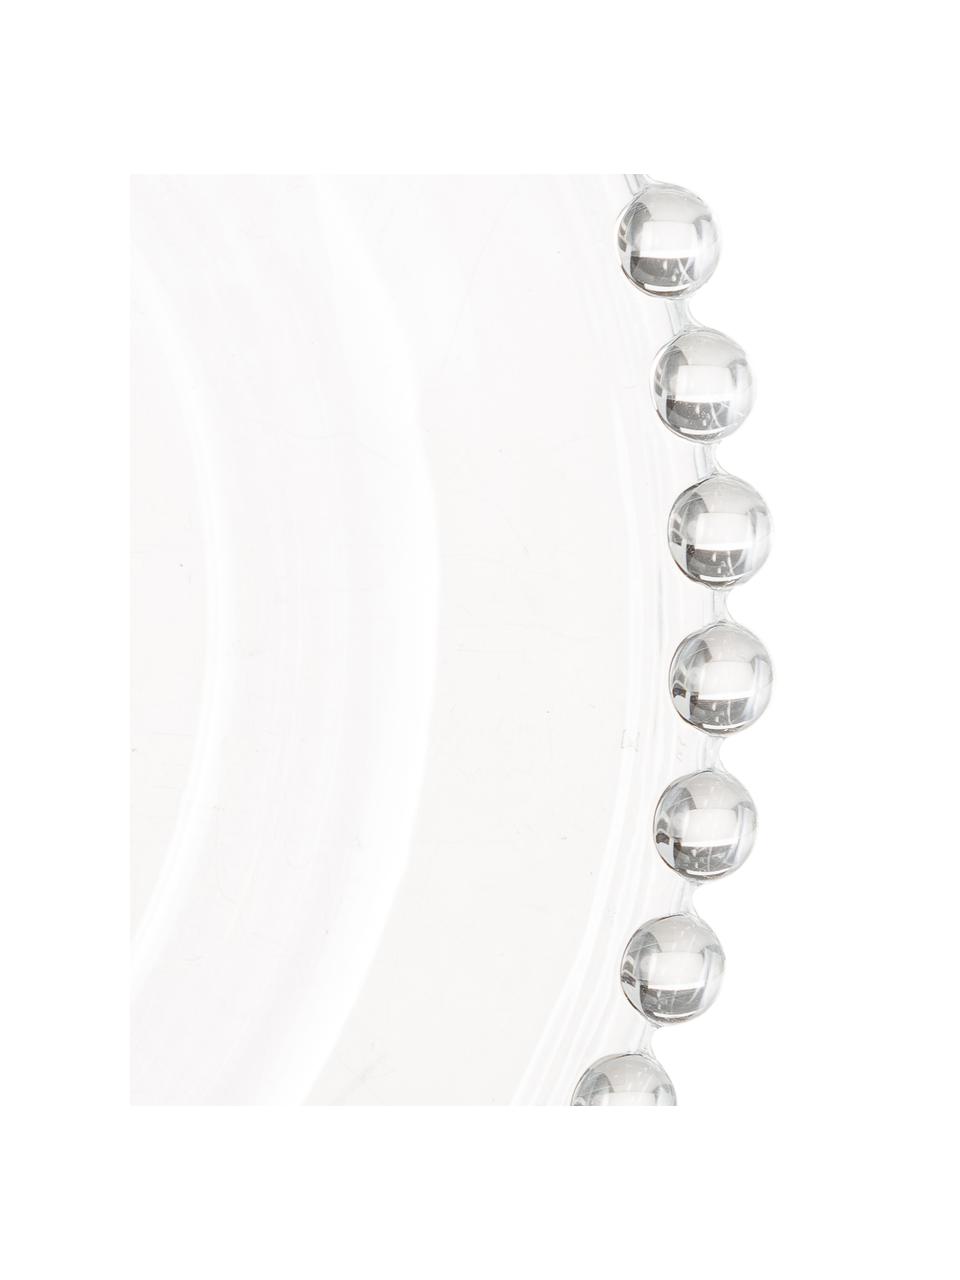 Glazen dessertborden Perles met randdecoratie, 2 stuks, Glas, Transparant, Ø 21 cm